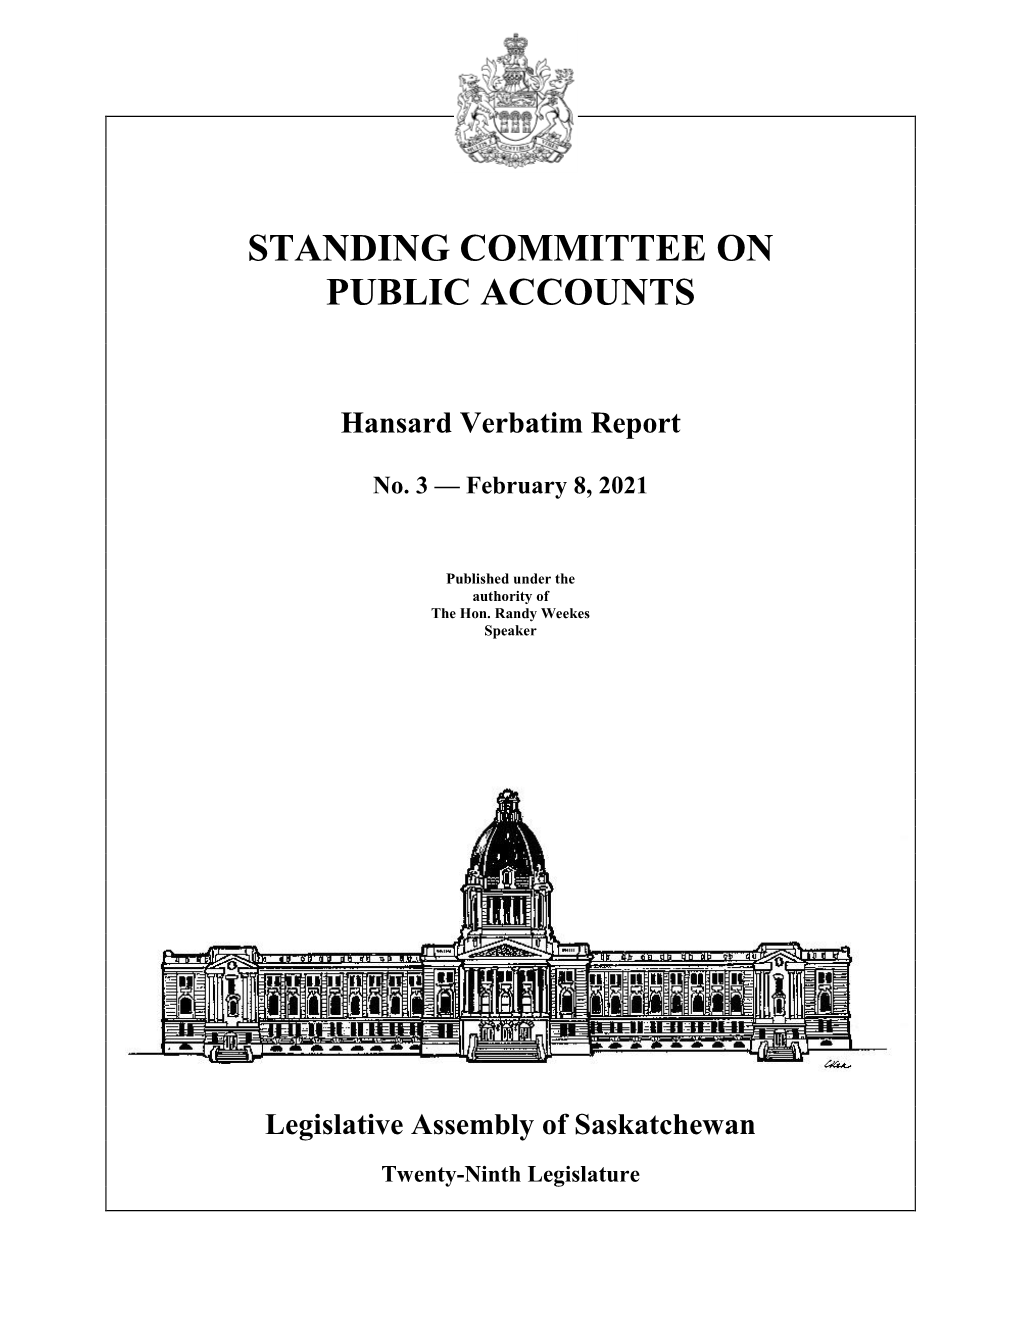 February 8, 2021 Public Accounts Committee